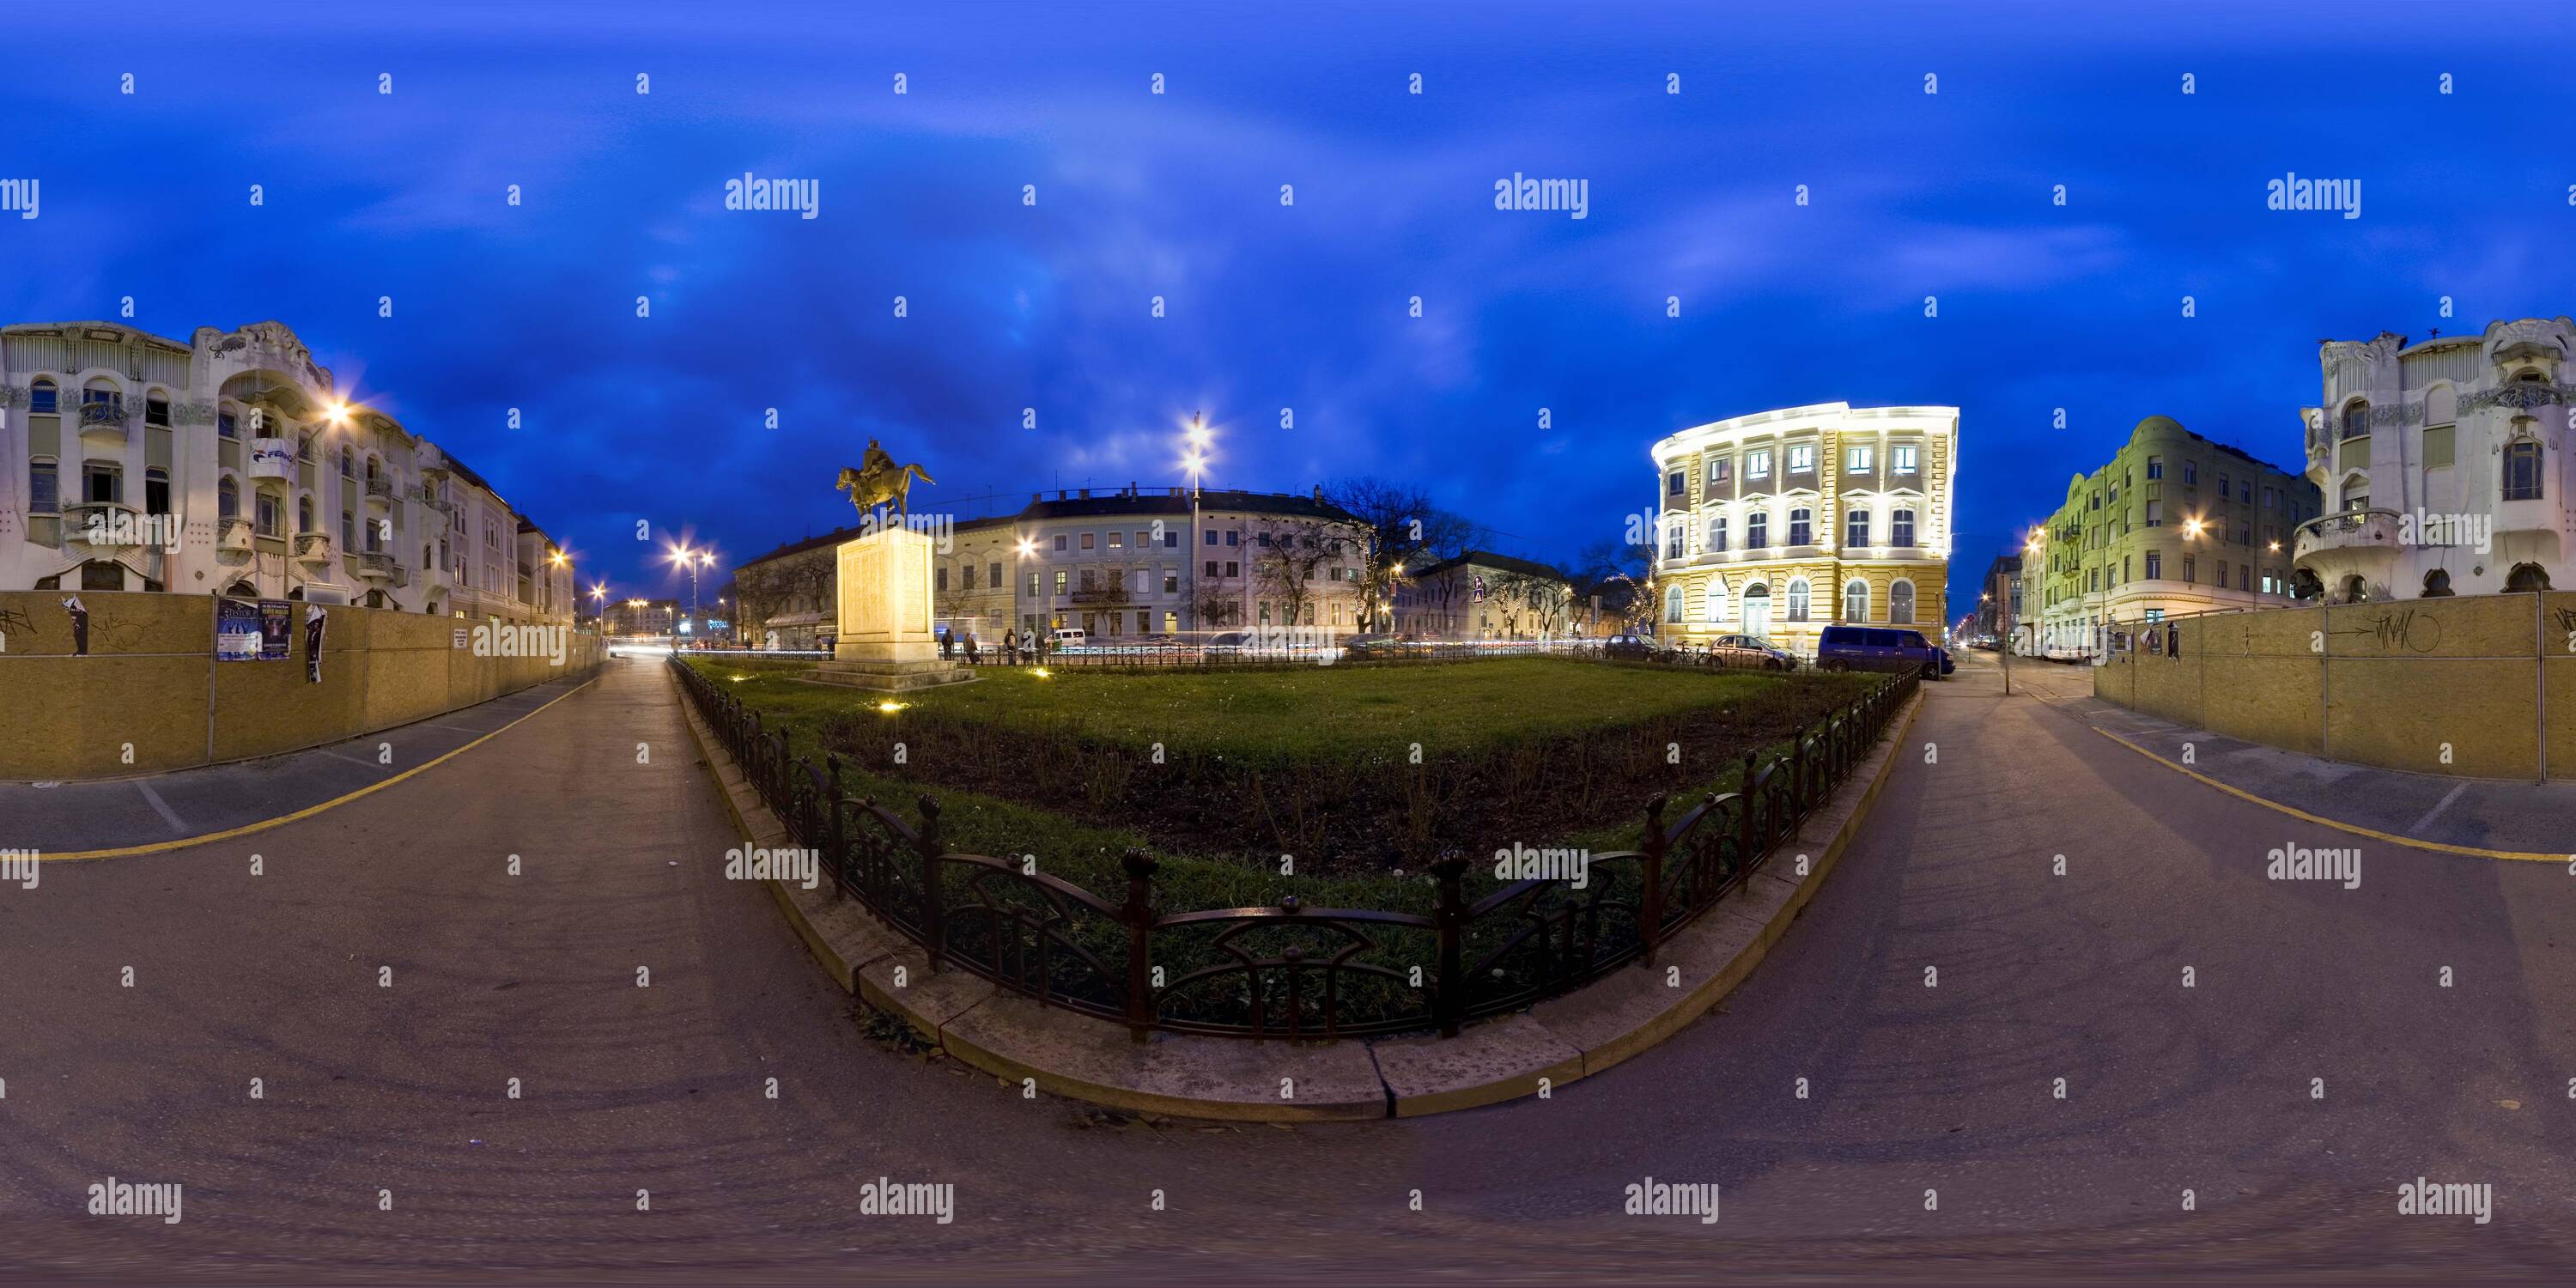 360 degree panoramic view of REOK Palace's renovation at night